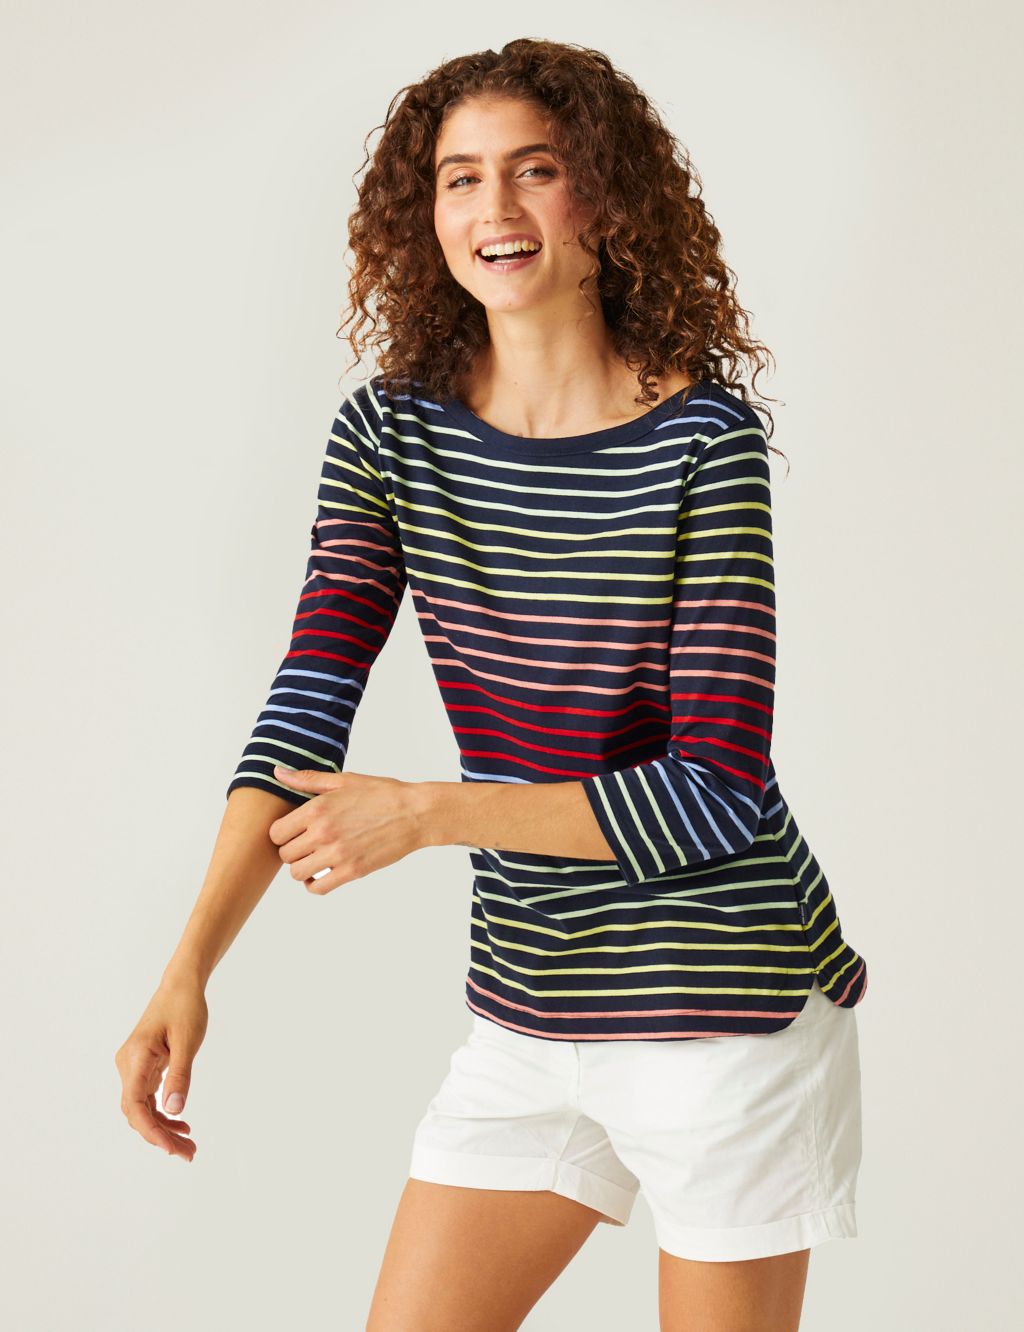 Bayletta Cotton Blend Striped T-Shirt image 1